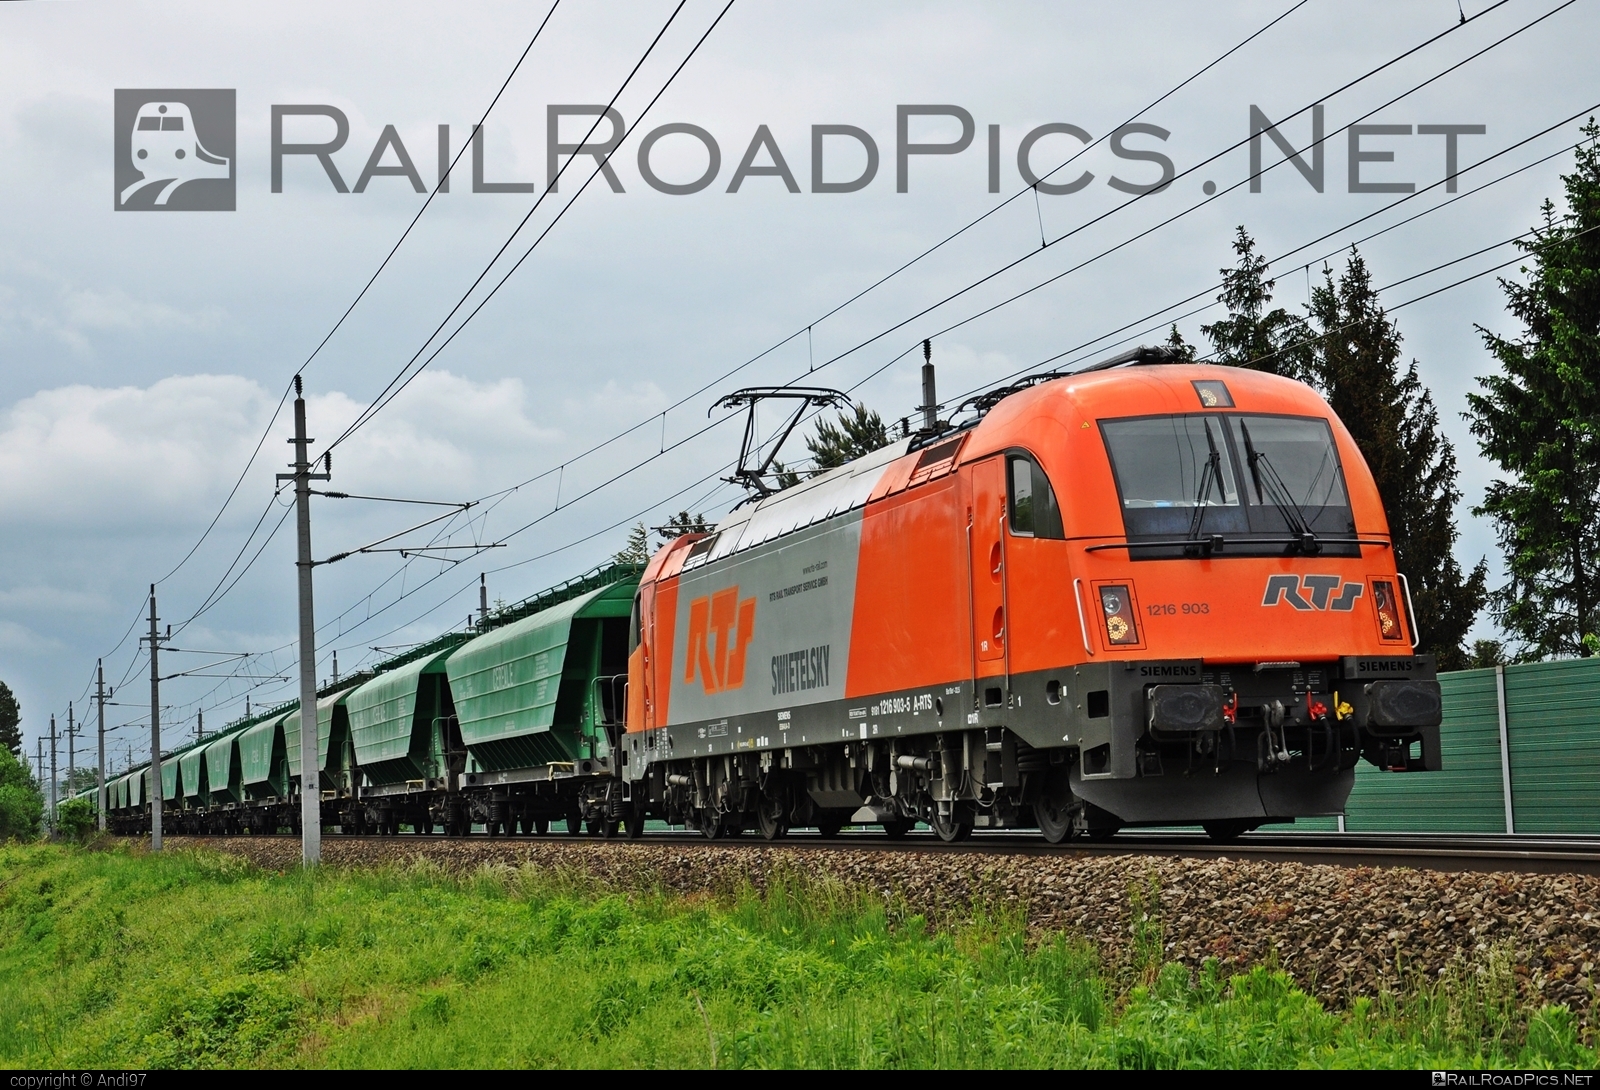 Siemens ES 64 U4 - 1216 903 operated by RTS Rail Transport Service GmbH #cereale #es64 #es64u4 #eurosprinter #hopperwagon #railtransportservicegmbh #rts #rtsrailtransportservice #siemens #siemensEs64 #siemensEs64u4 #siemenstaurus #swietelsky #tauruslocomotive